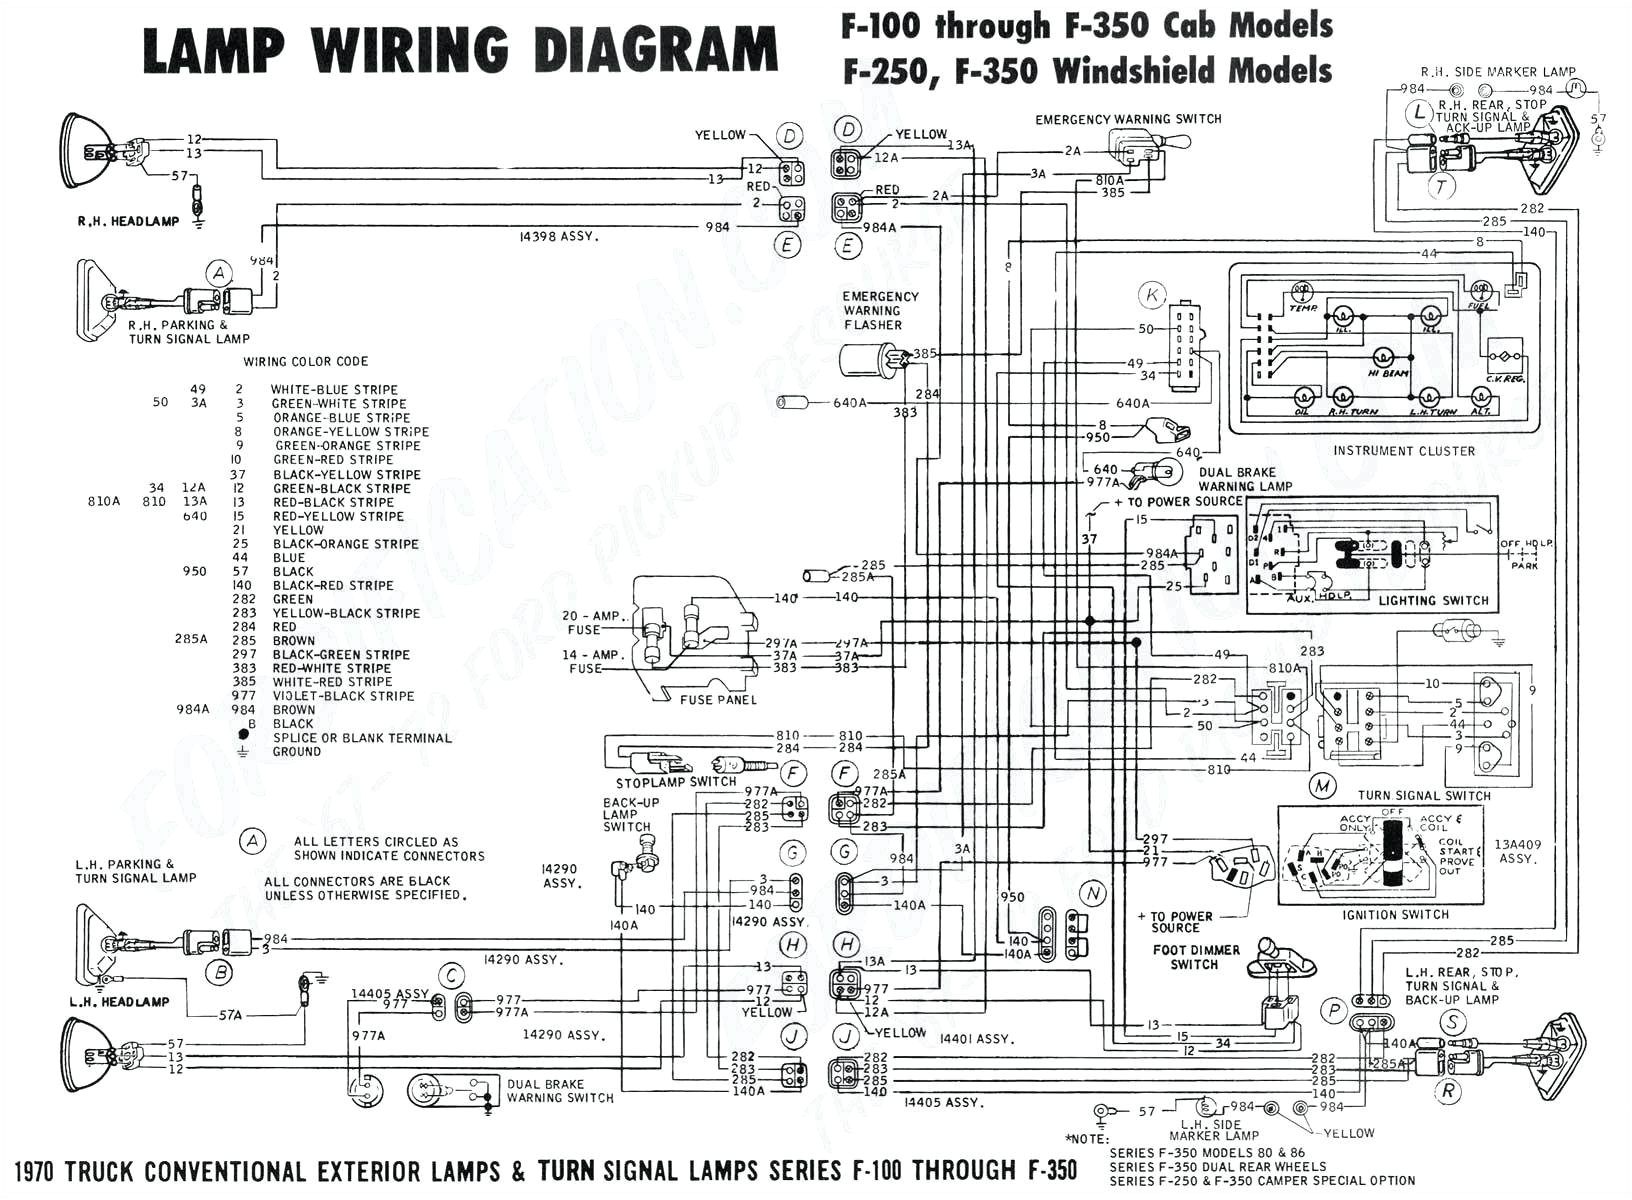 42re transmission parts diagram wiring diagram new 48re transmission parts diagram